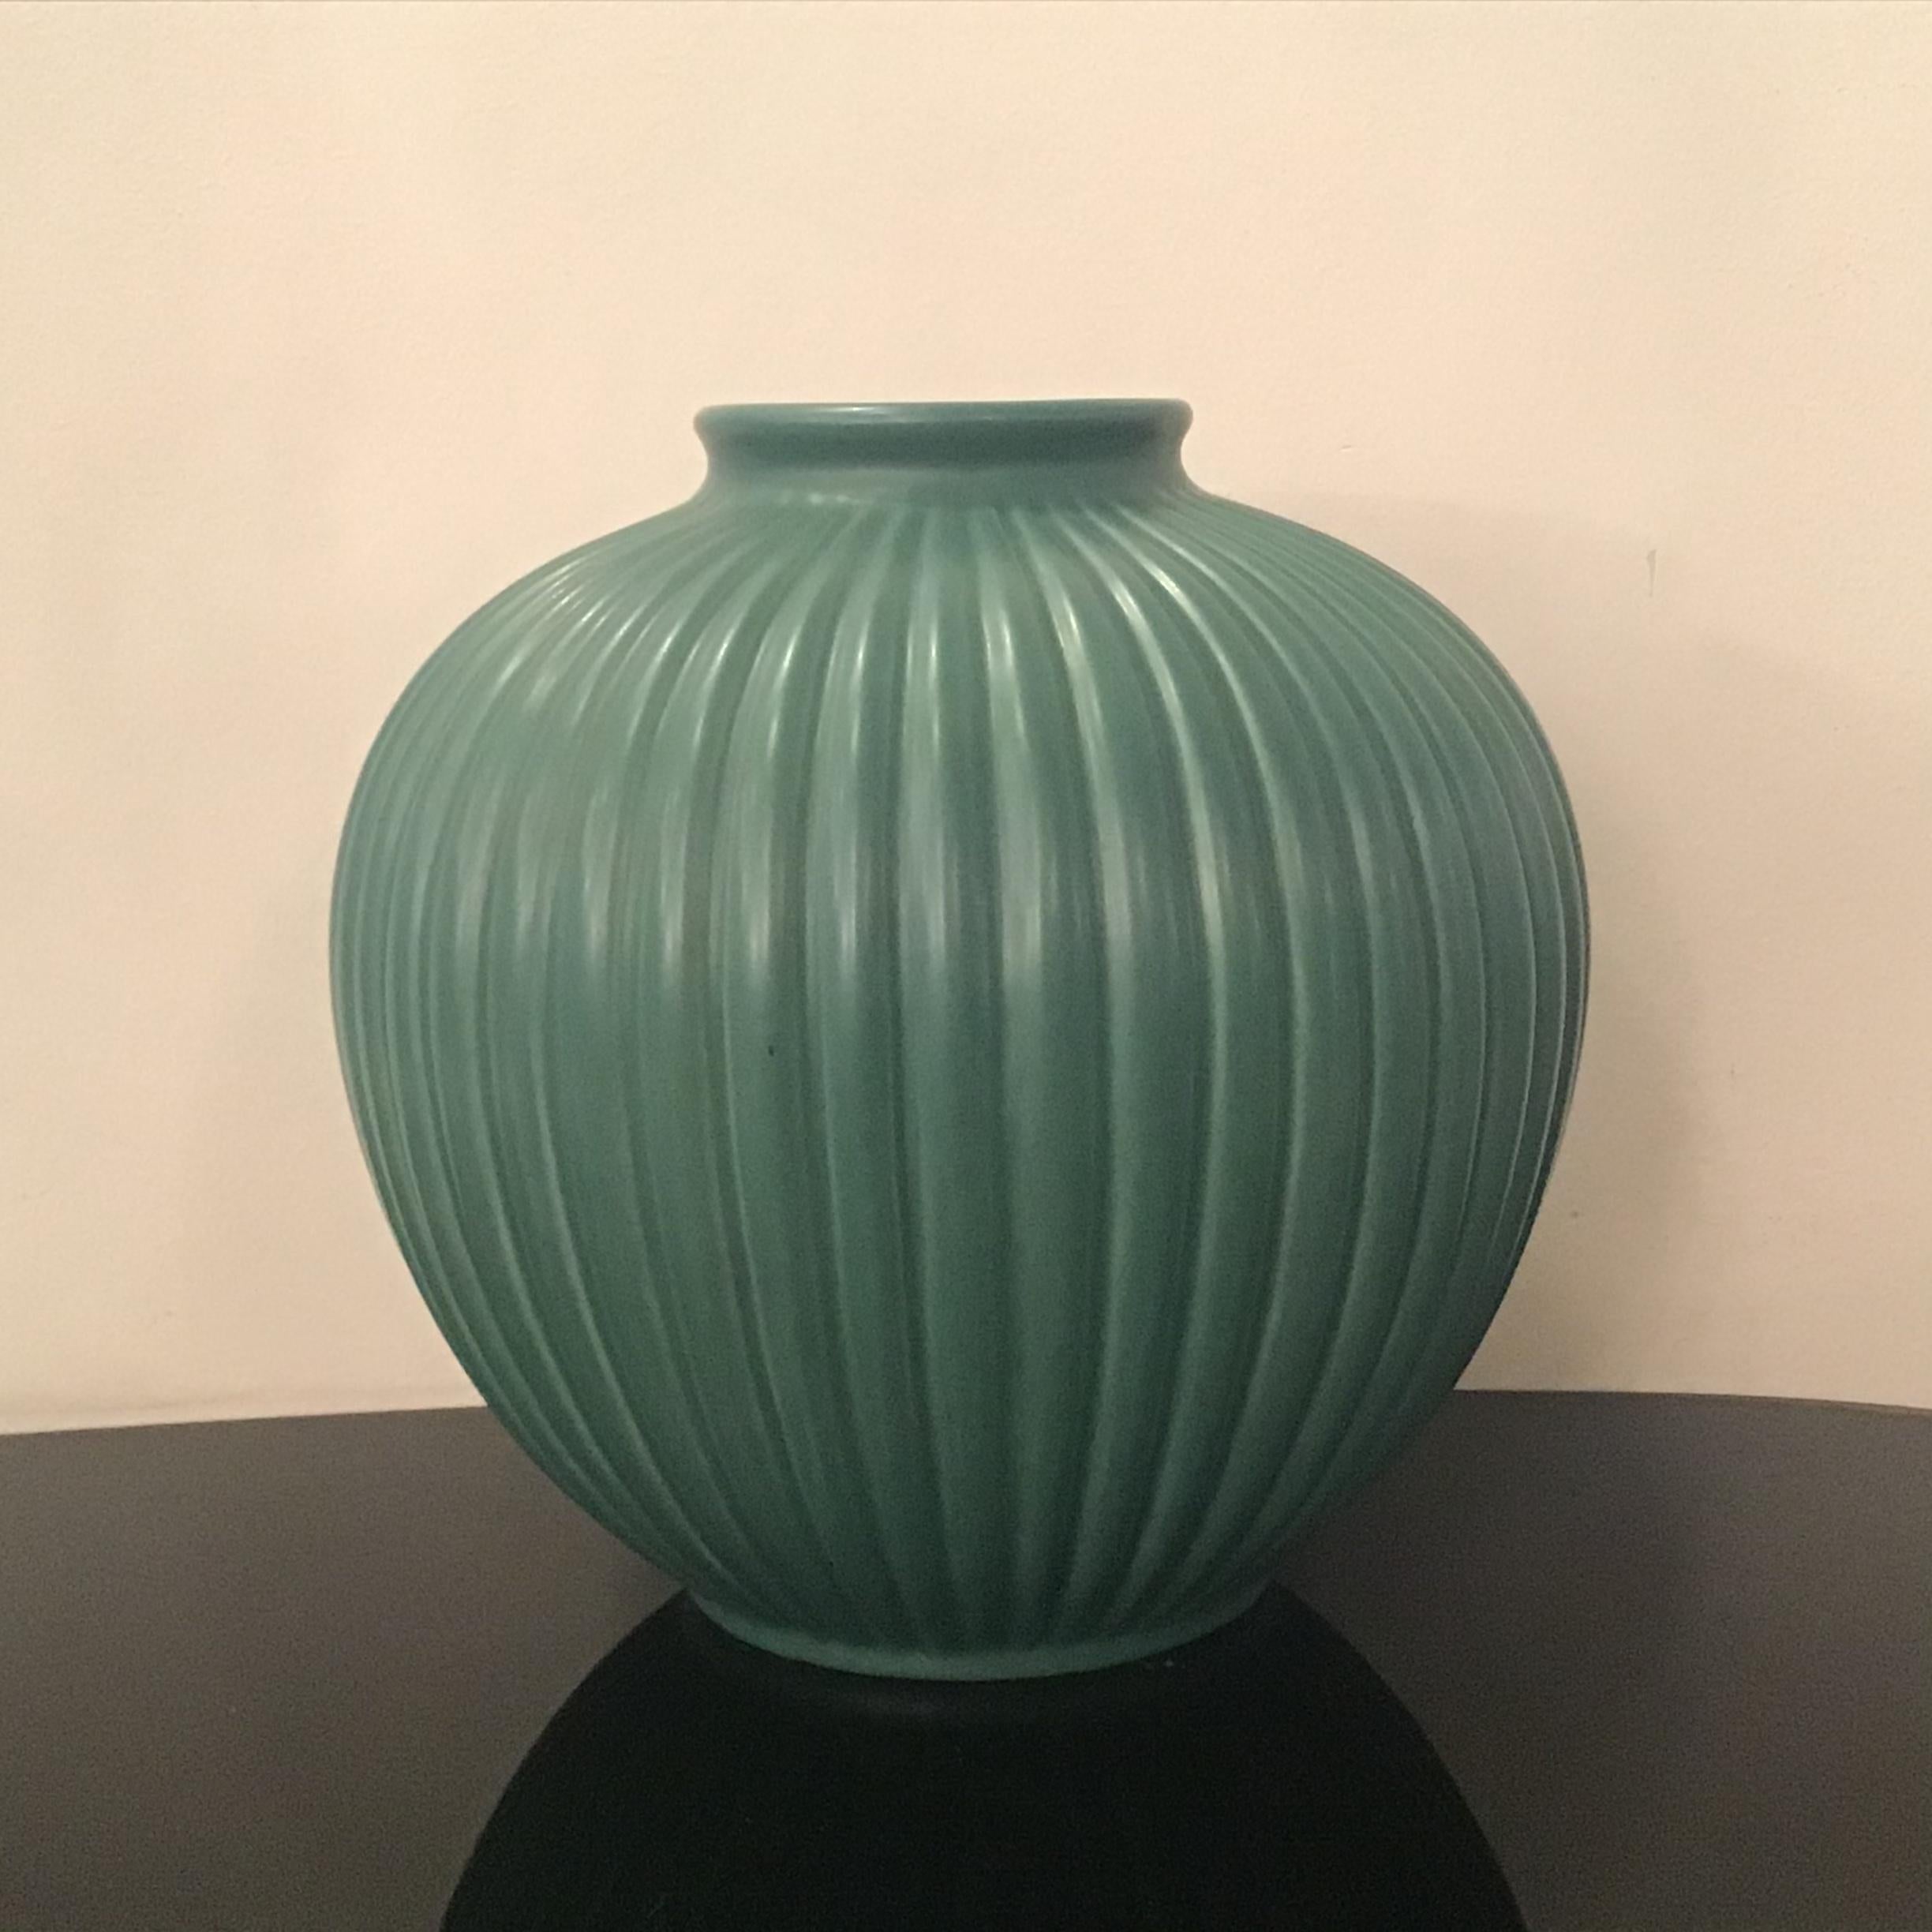 Richard Ginori Giovanni Gariboldi Pair of Vases Green Ceramic 1950 Italy For Sale 1